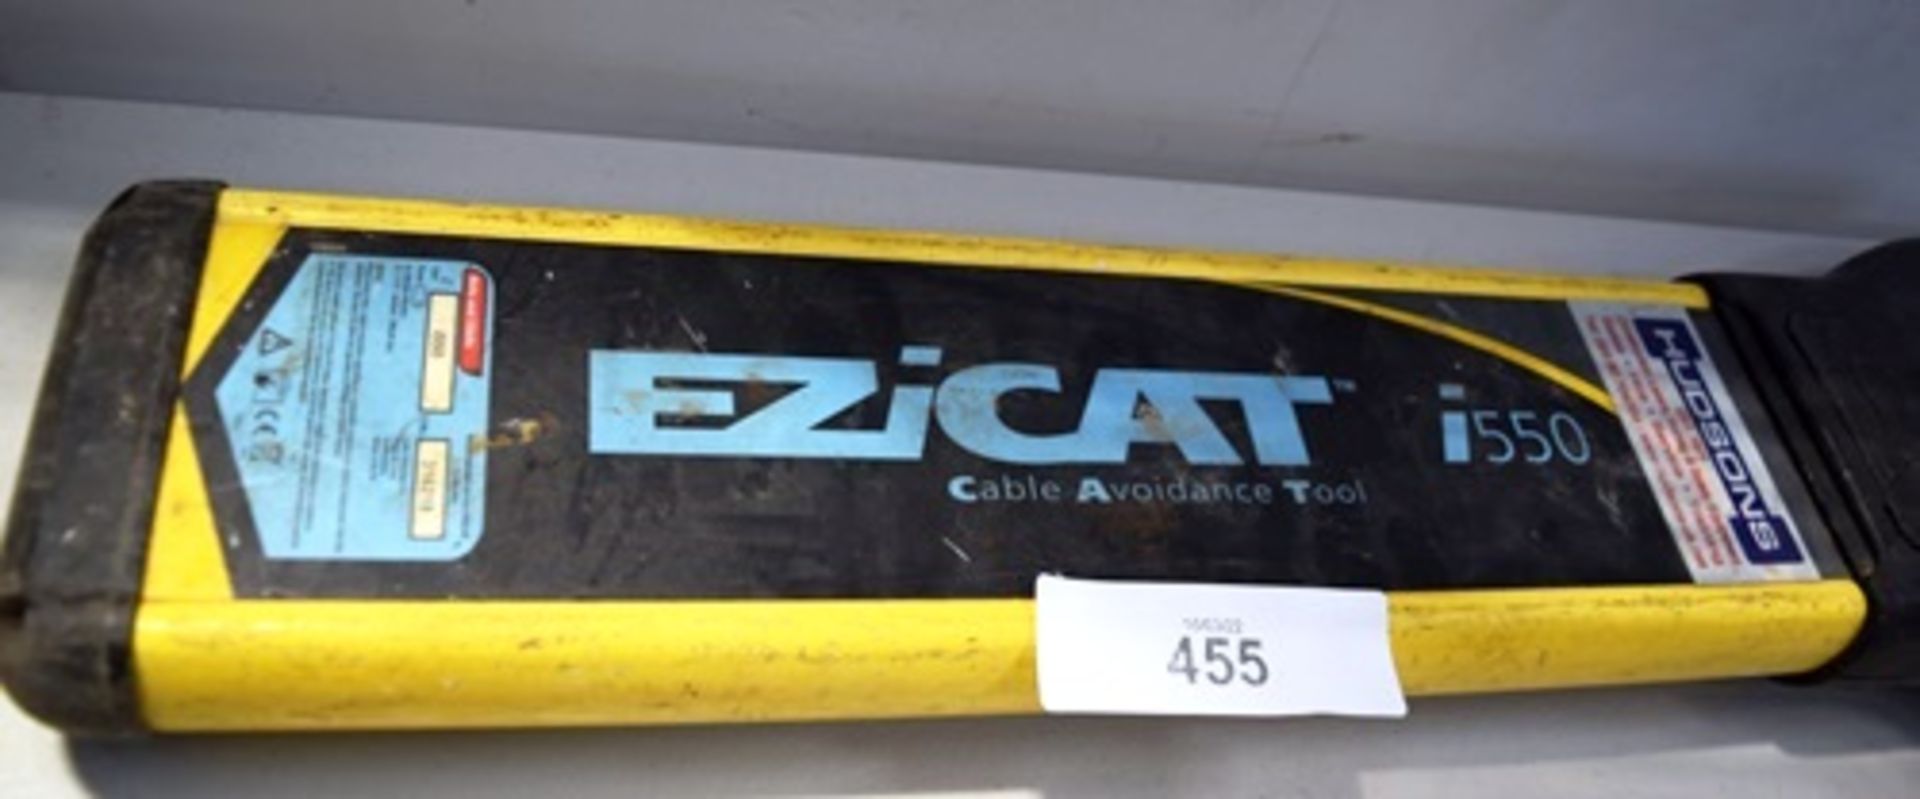 1 x Ezicat i550 cable avoidance tool, 1 x Ezicat T100 signal transmitter with yellow canvas case, - Image 2 of 6